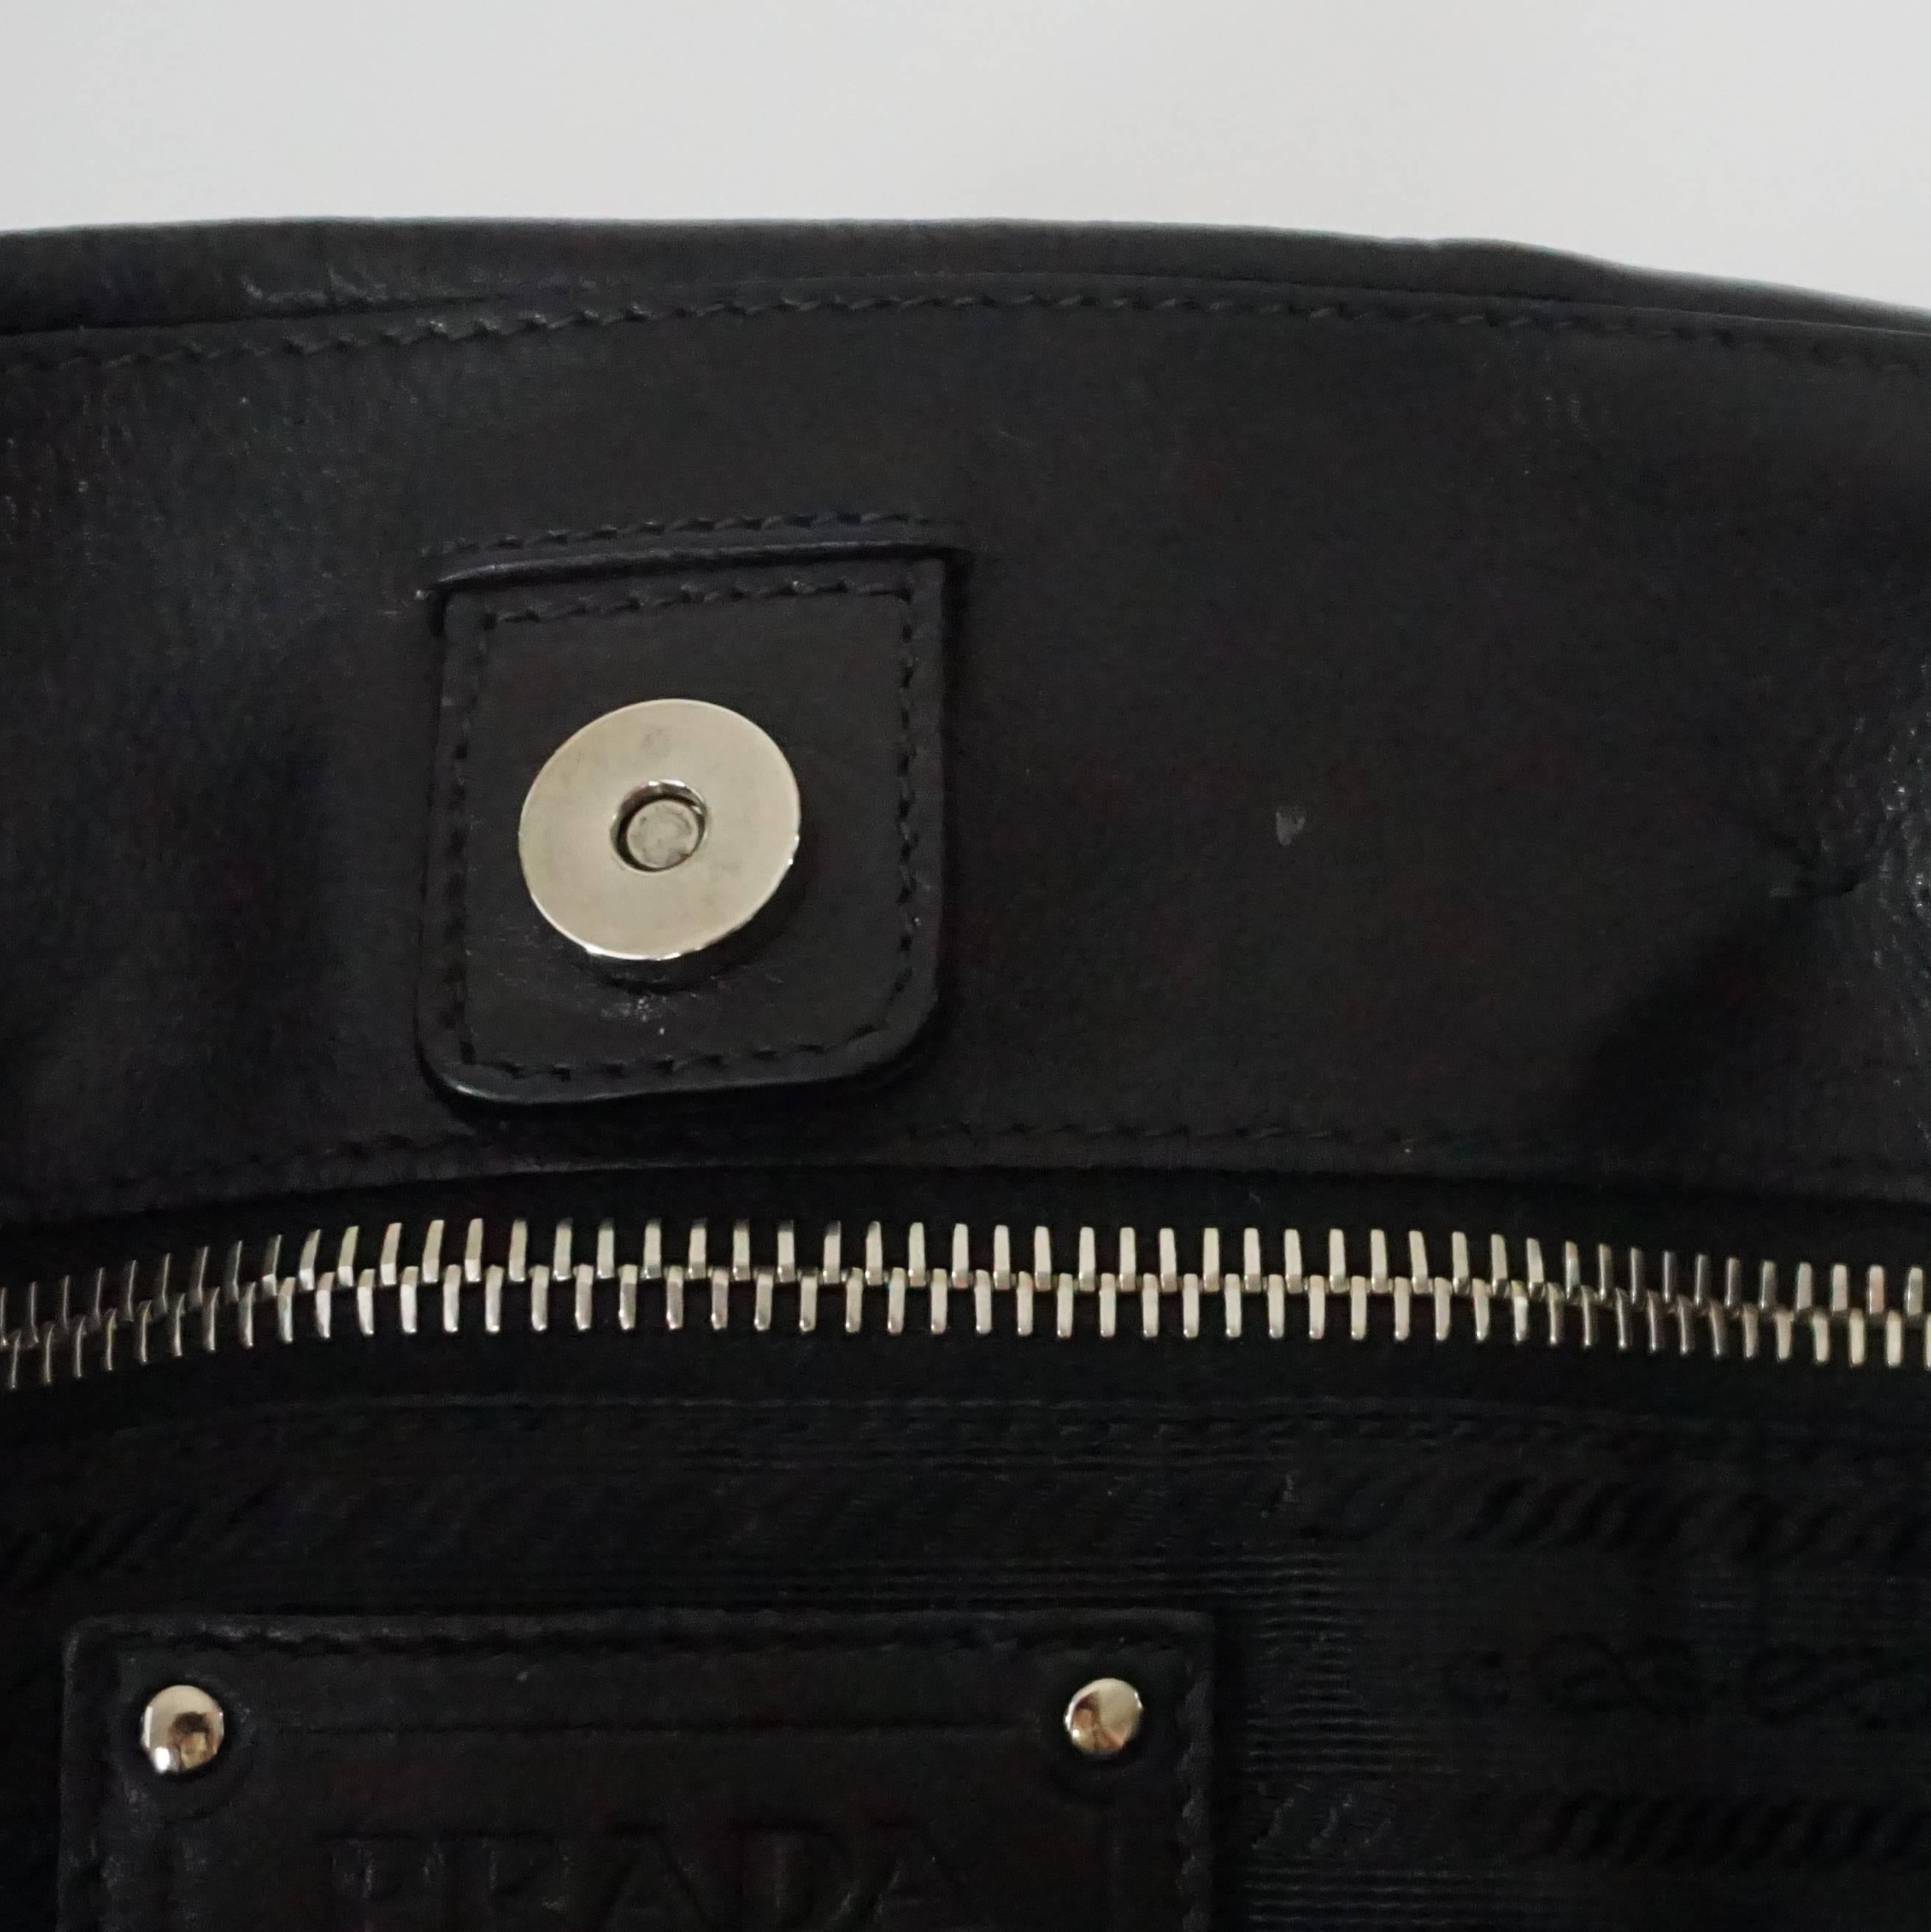 Prada Black Leather Shoulder Bag with Crossbody Strap and Charm - SHW - 4